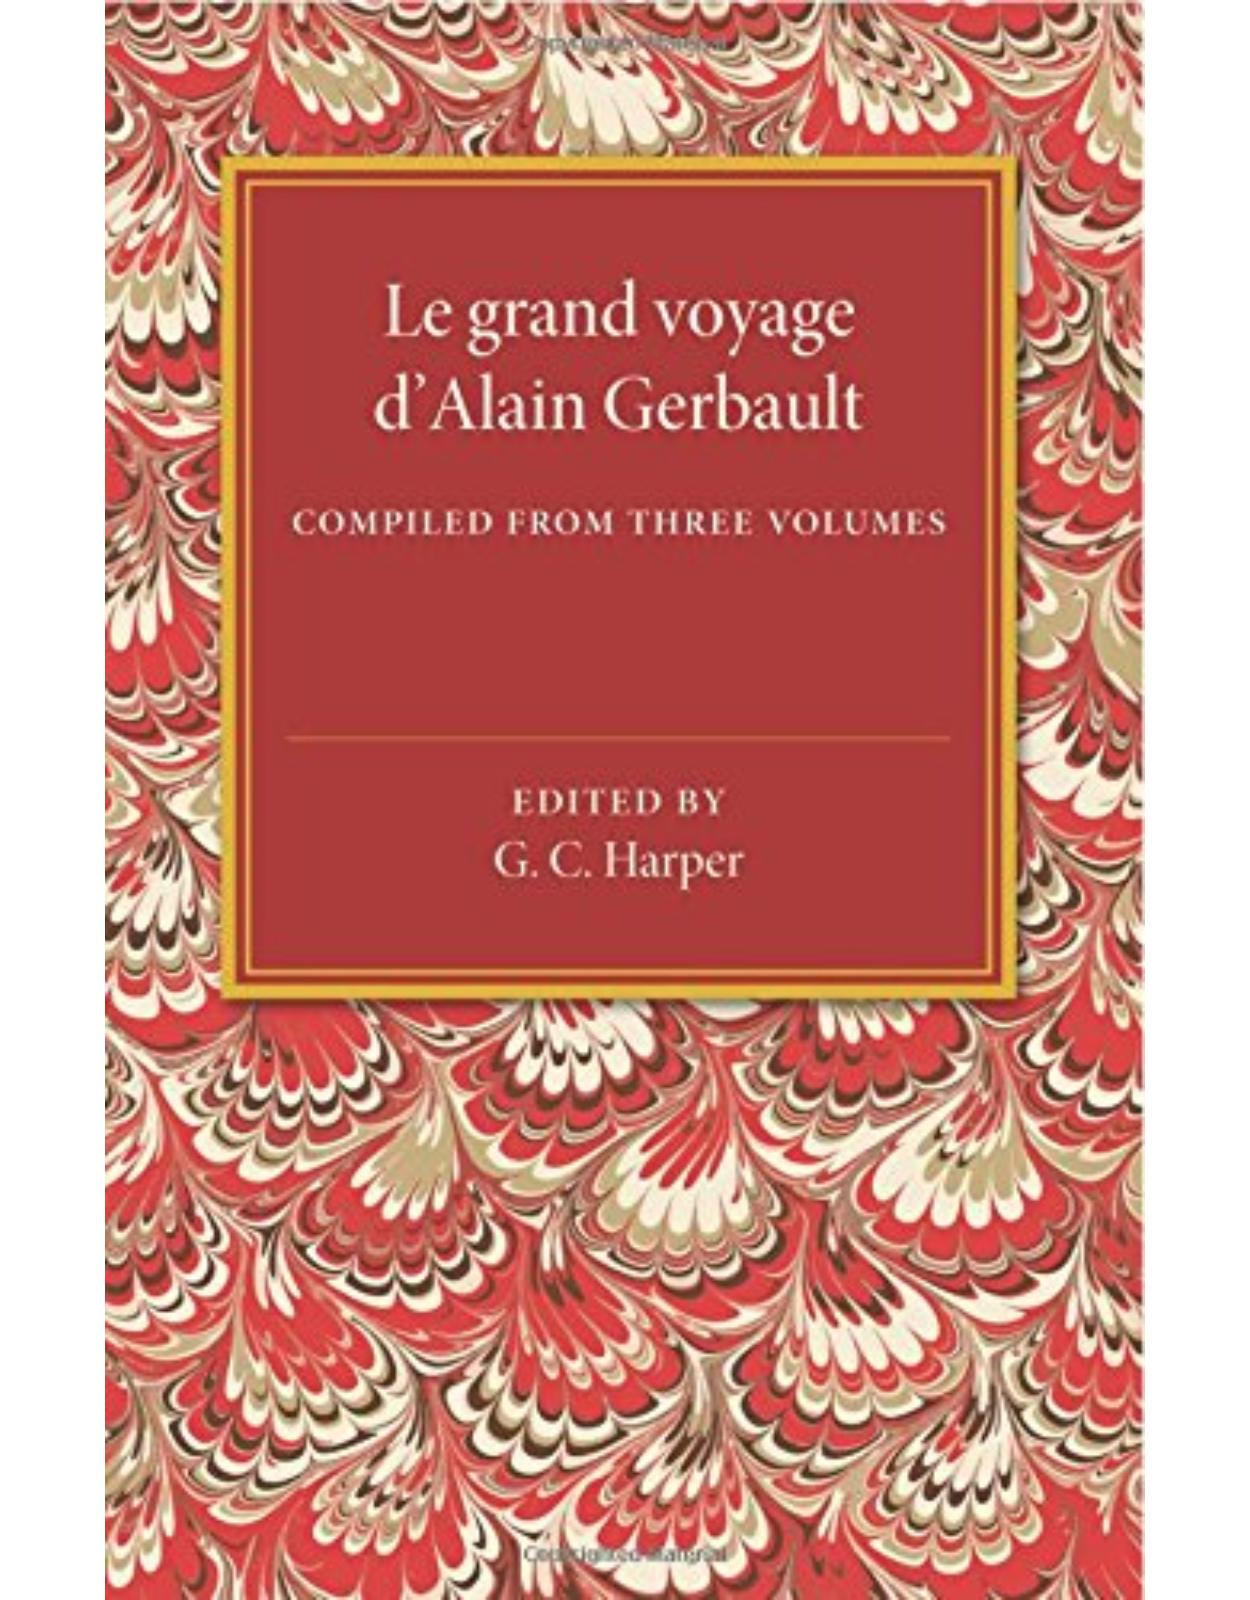 Le grand voyage d'Alain Gerbault 